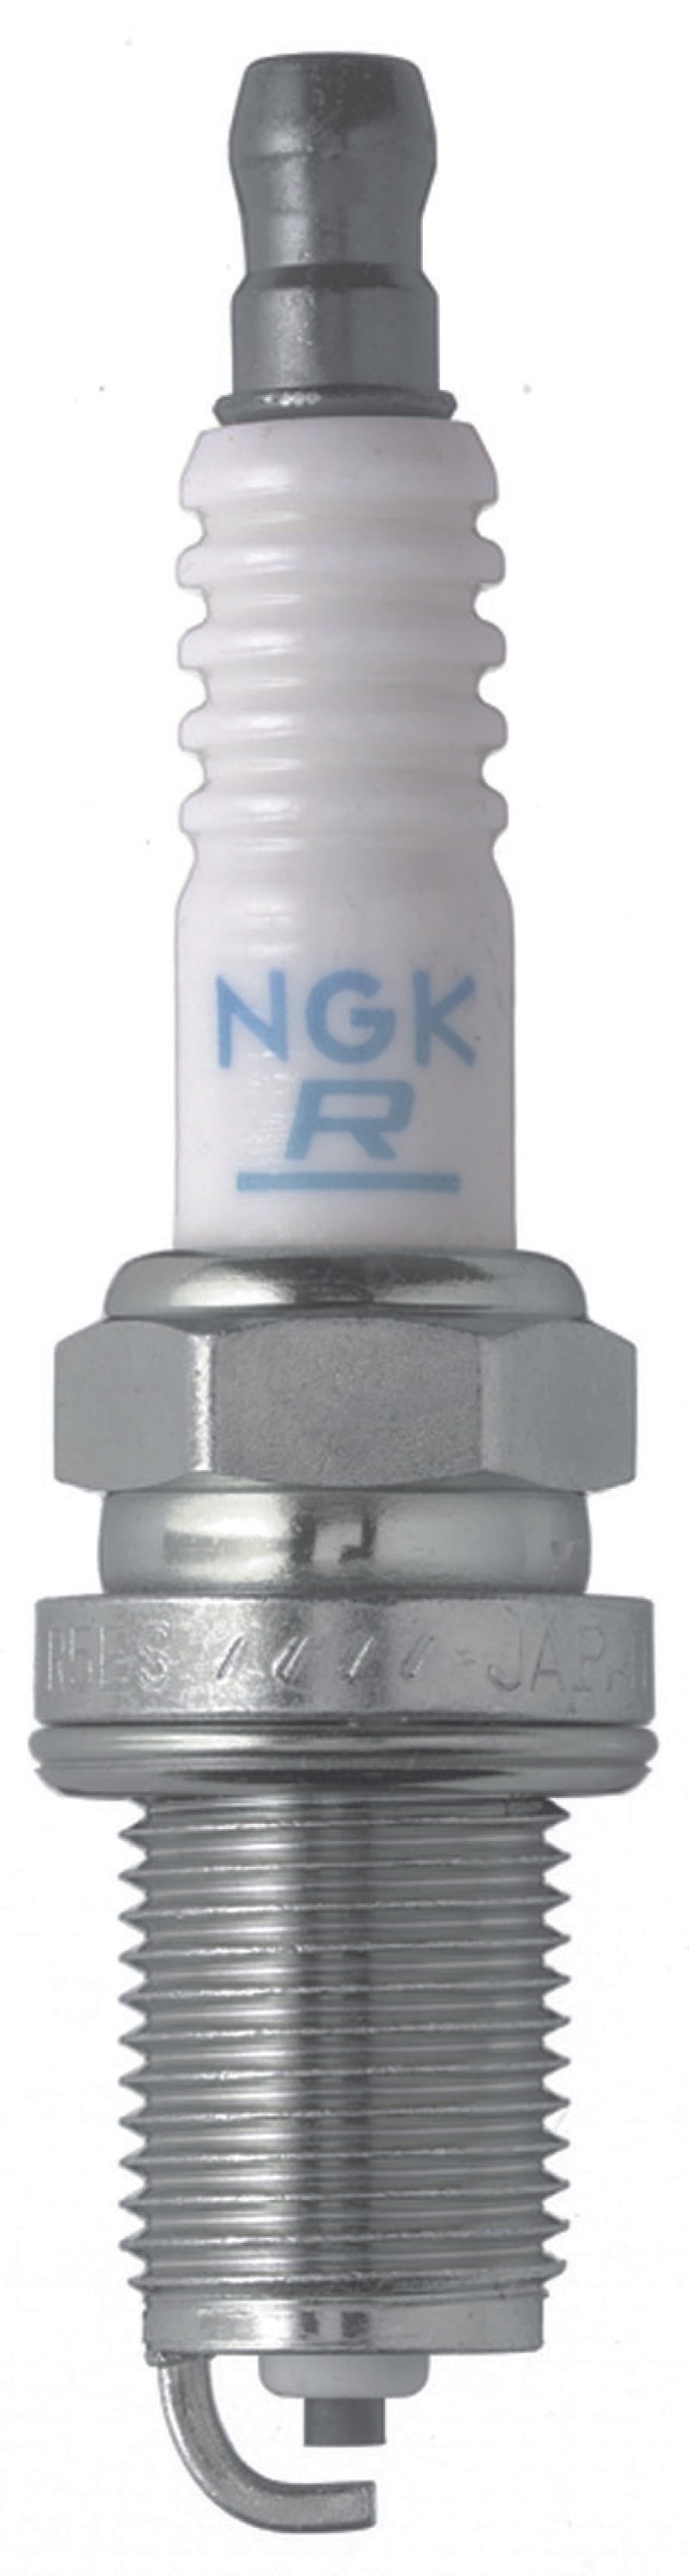 NGK Copper Spark Plug Box of 4 (BKR7E).